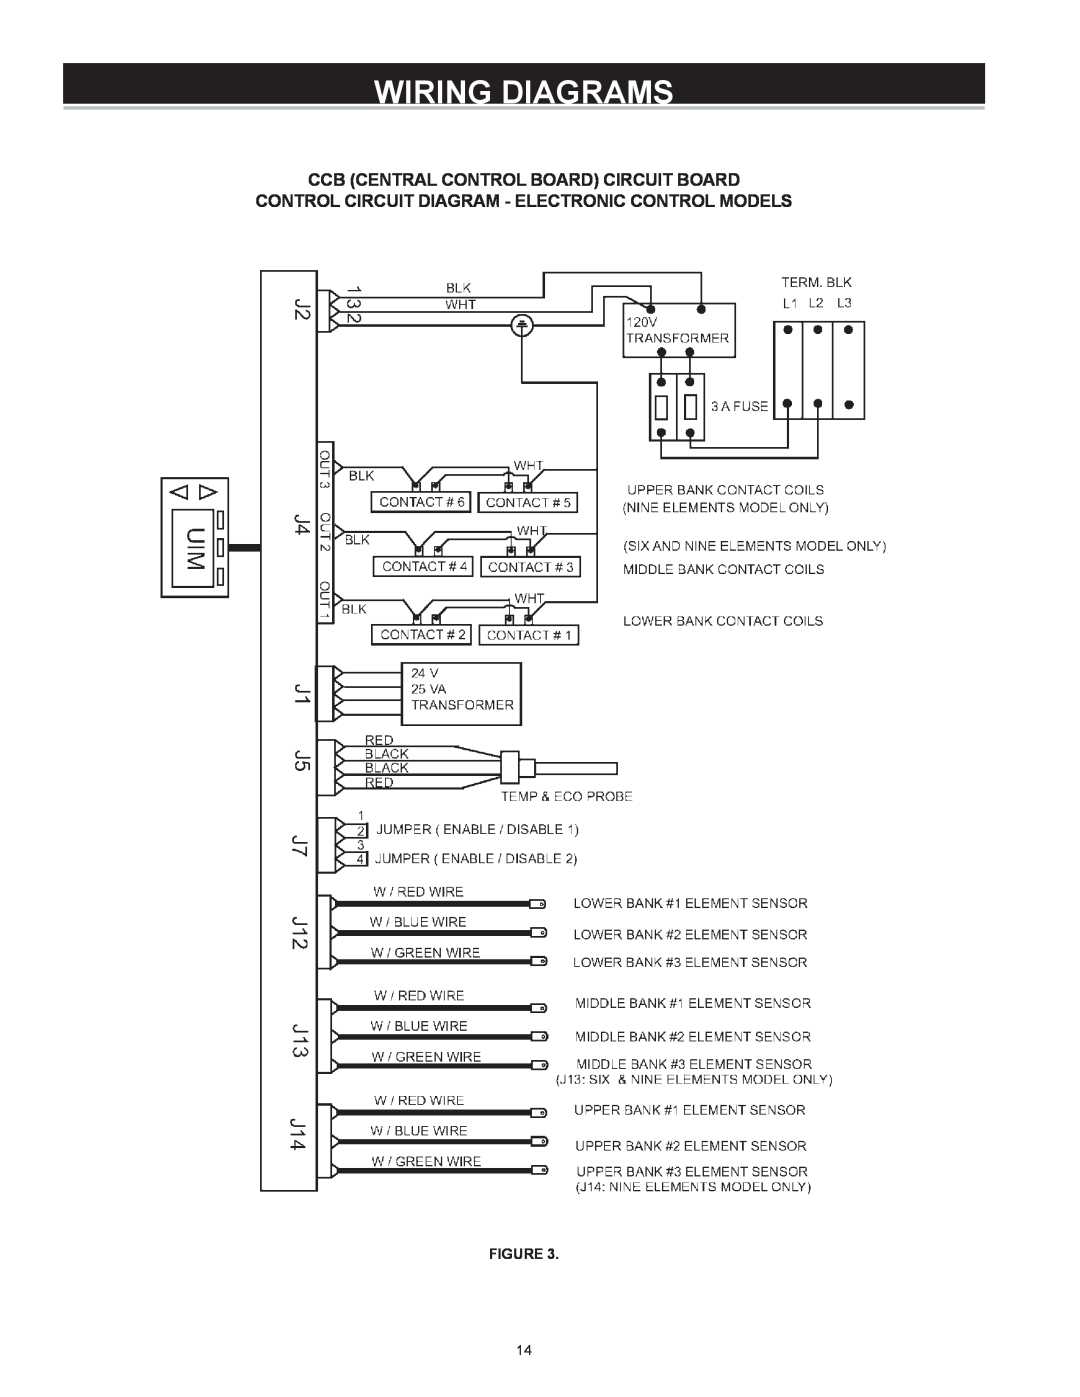 A.O. Smith Dve-52/80/120 instruction manual Wiring Diagrams, Ccb Central Control Board Circuit Board 